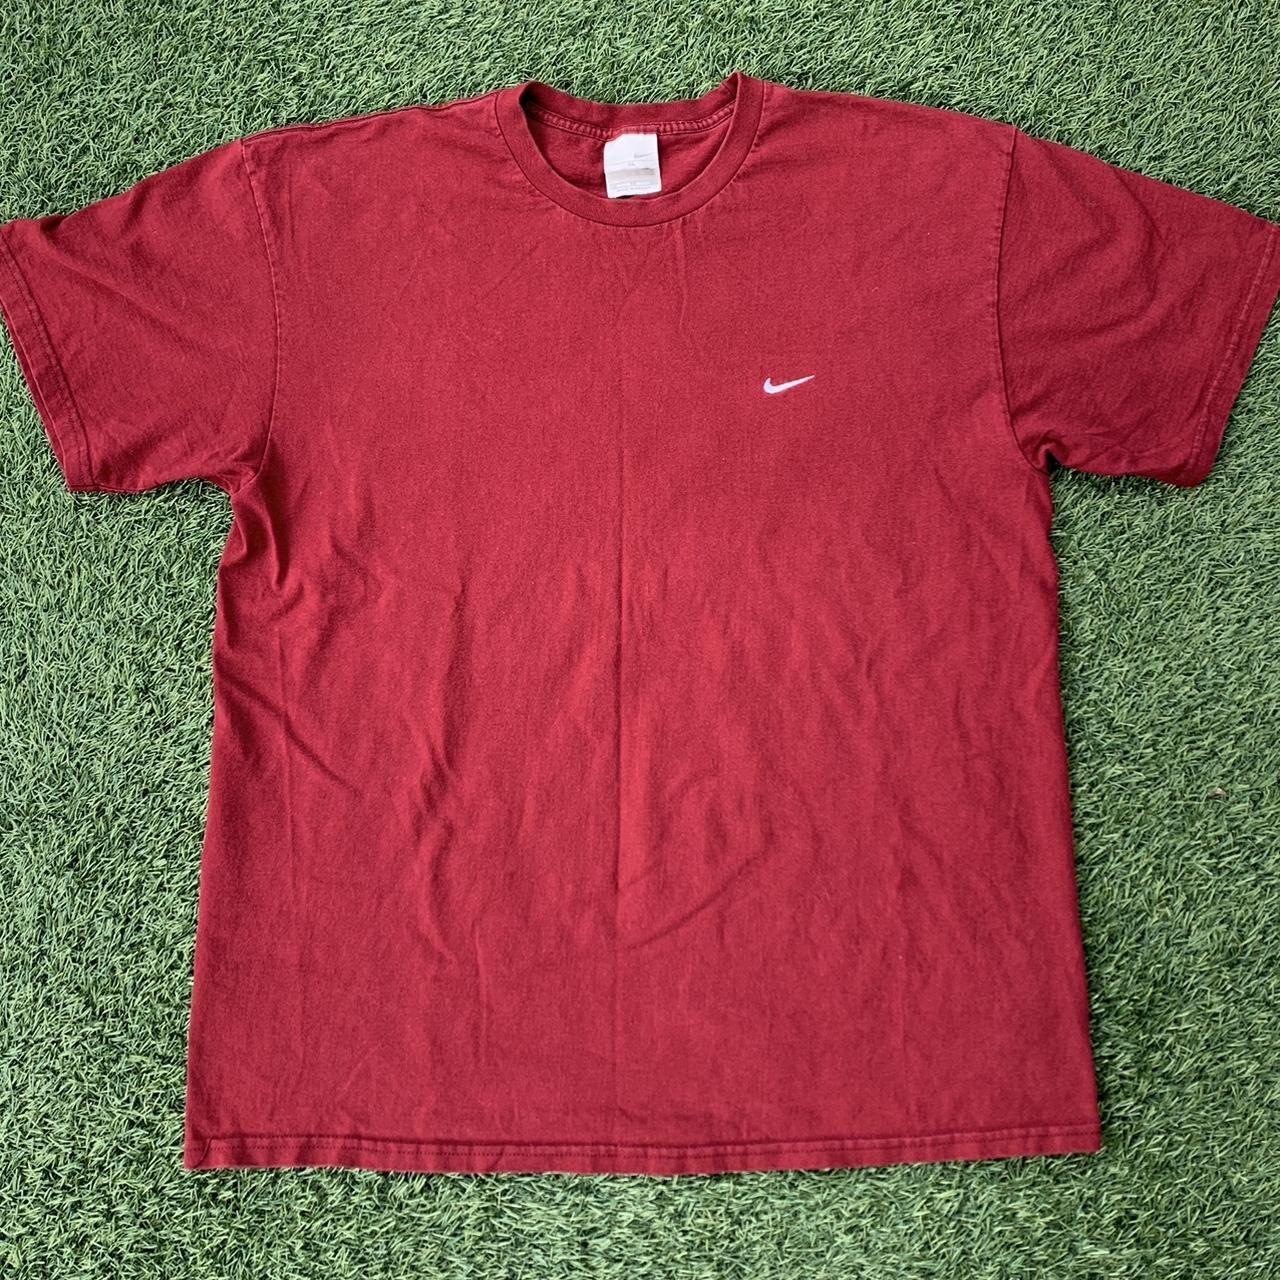 Early 2000’s Nike Mini Swoosh T-Shirt - Hmu with any... - Depop